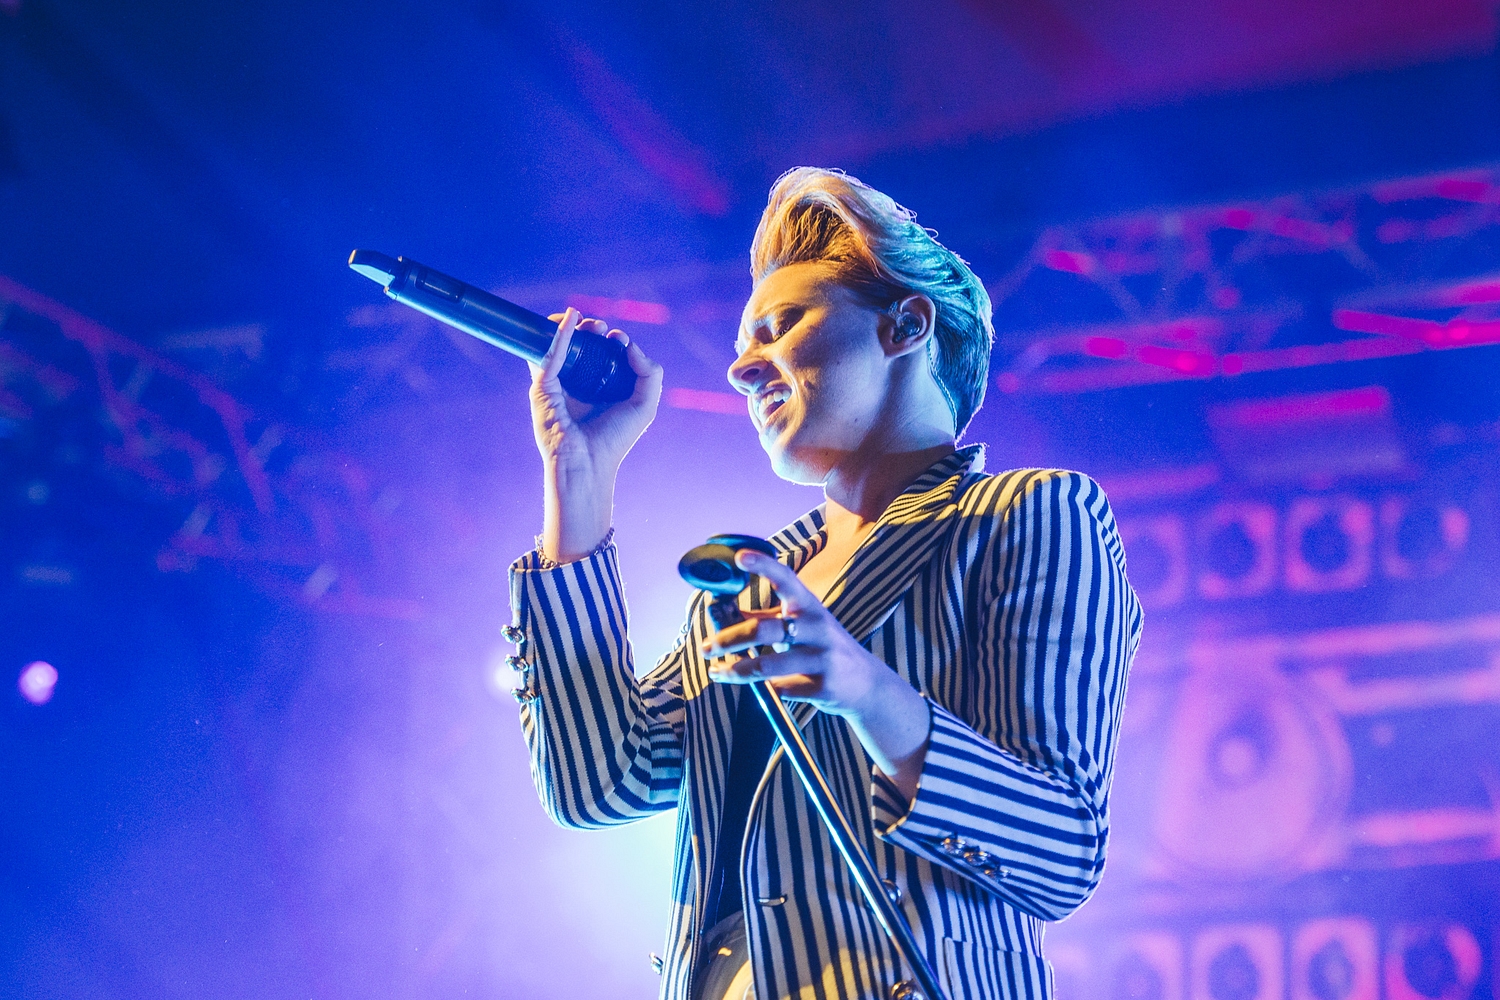 La Roux gives electro-pop a striking edge at Latitude 2015